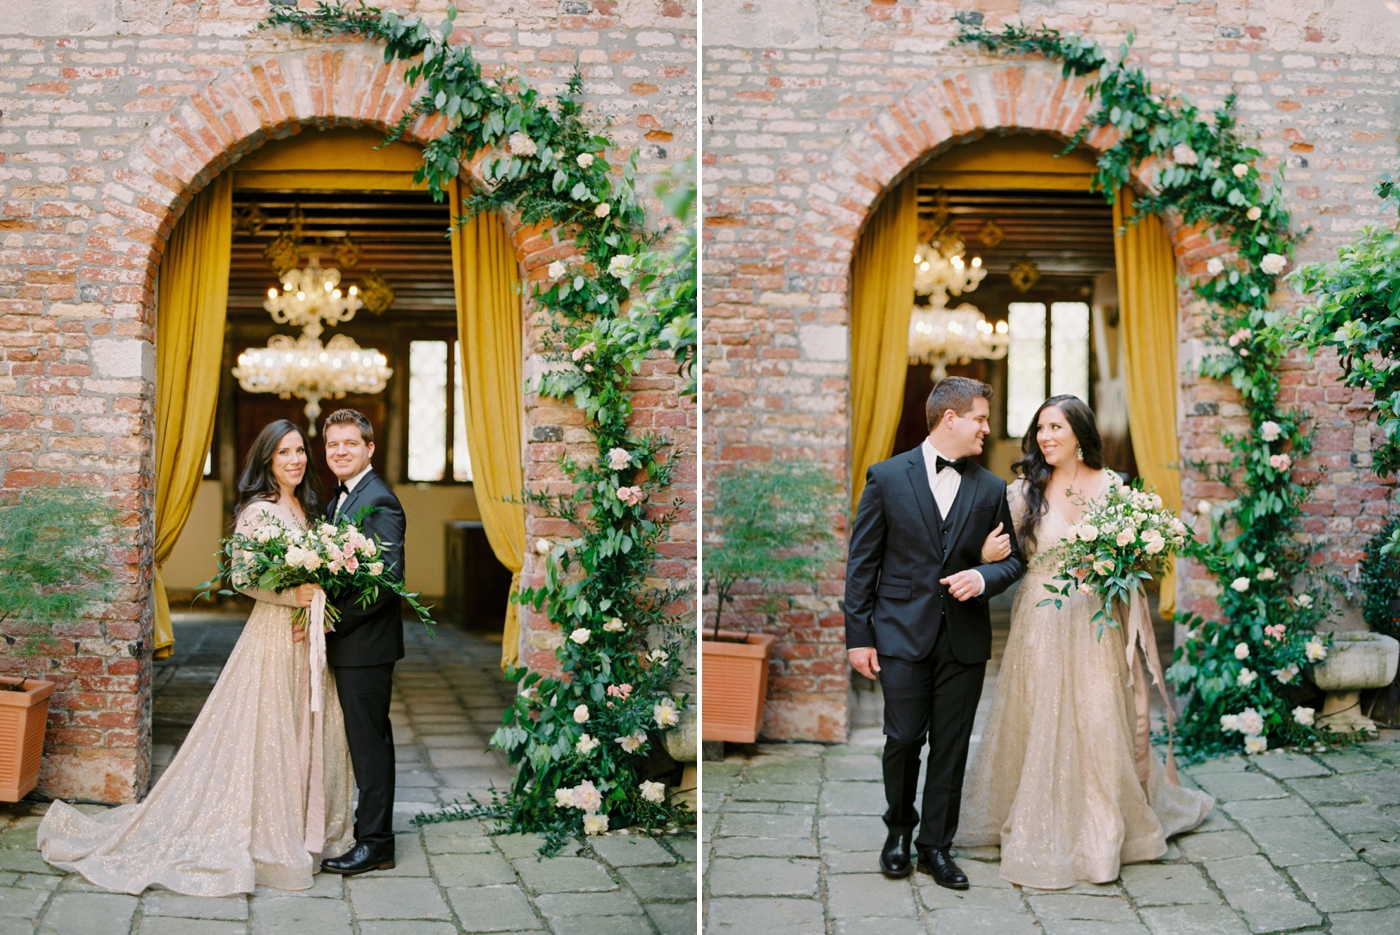 Venice italy wedding photographers | long sleeve wedding dress | italy vow renewal | justine milton fine art film photographer |vow renewal ceremony